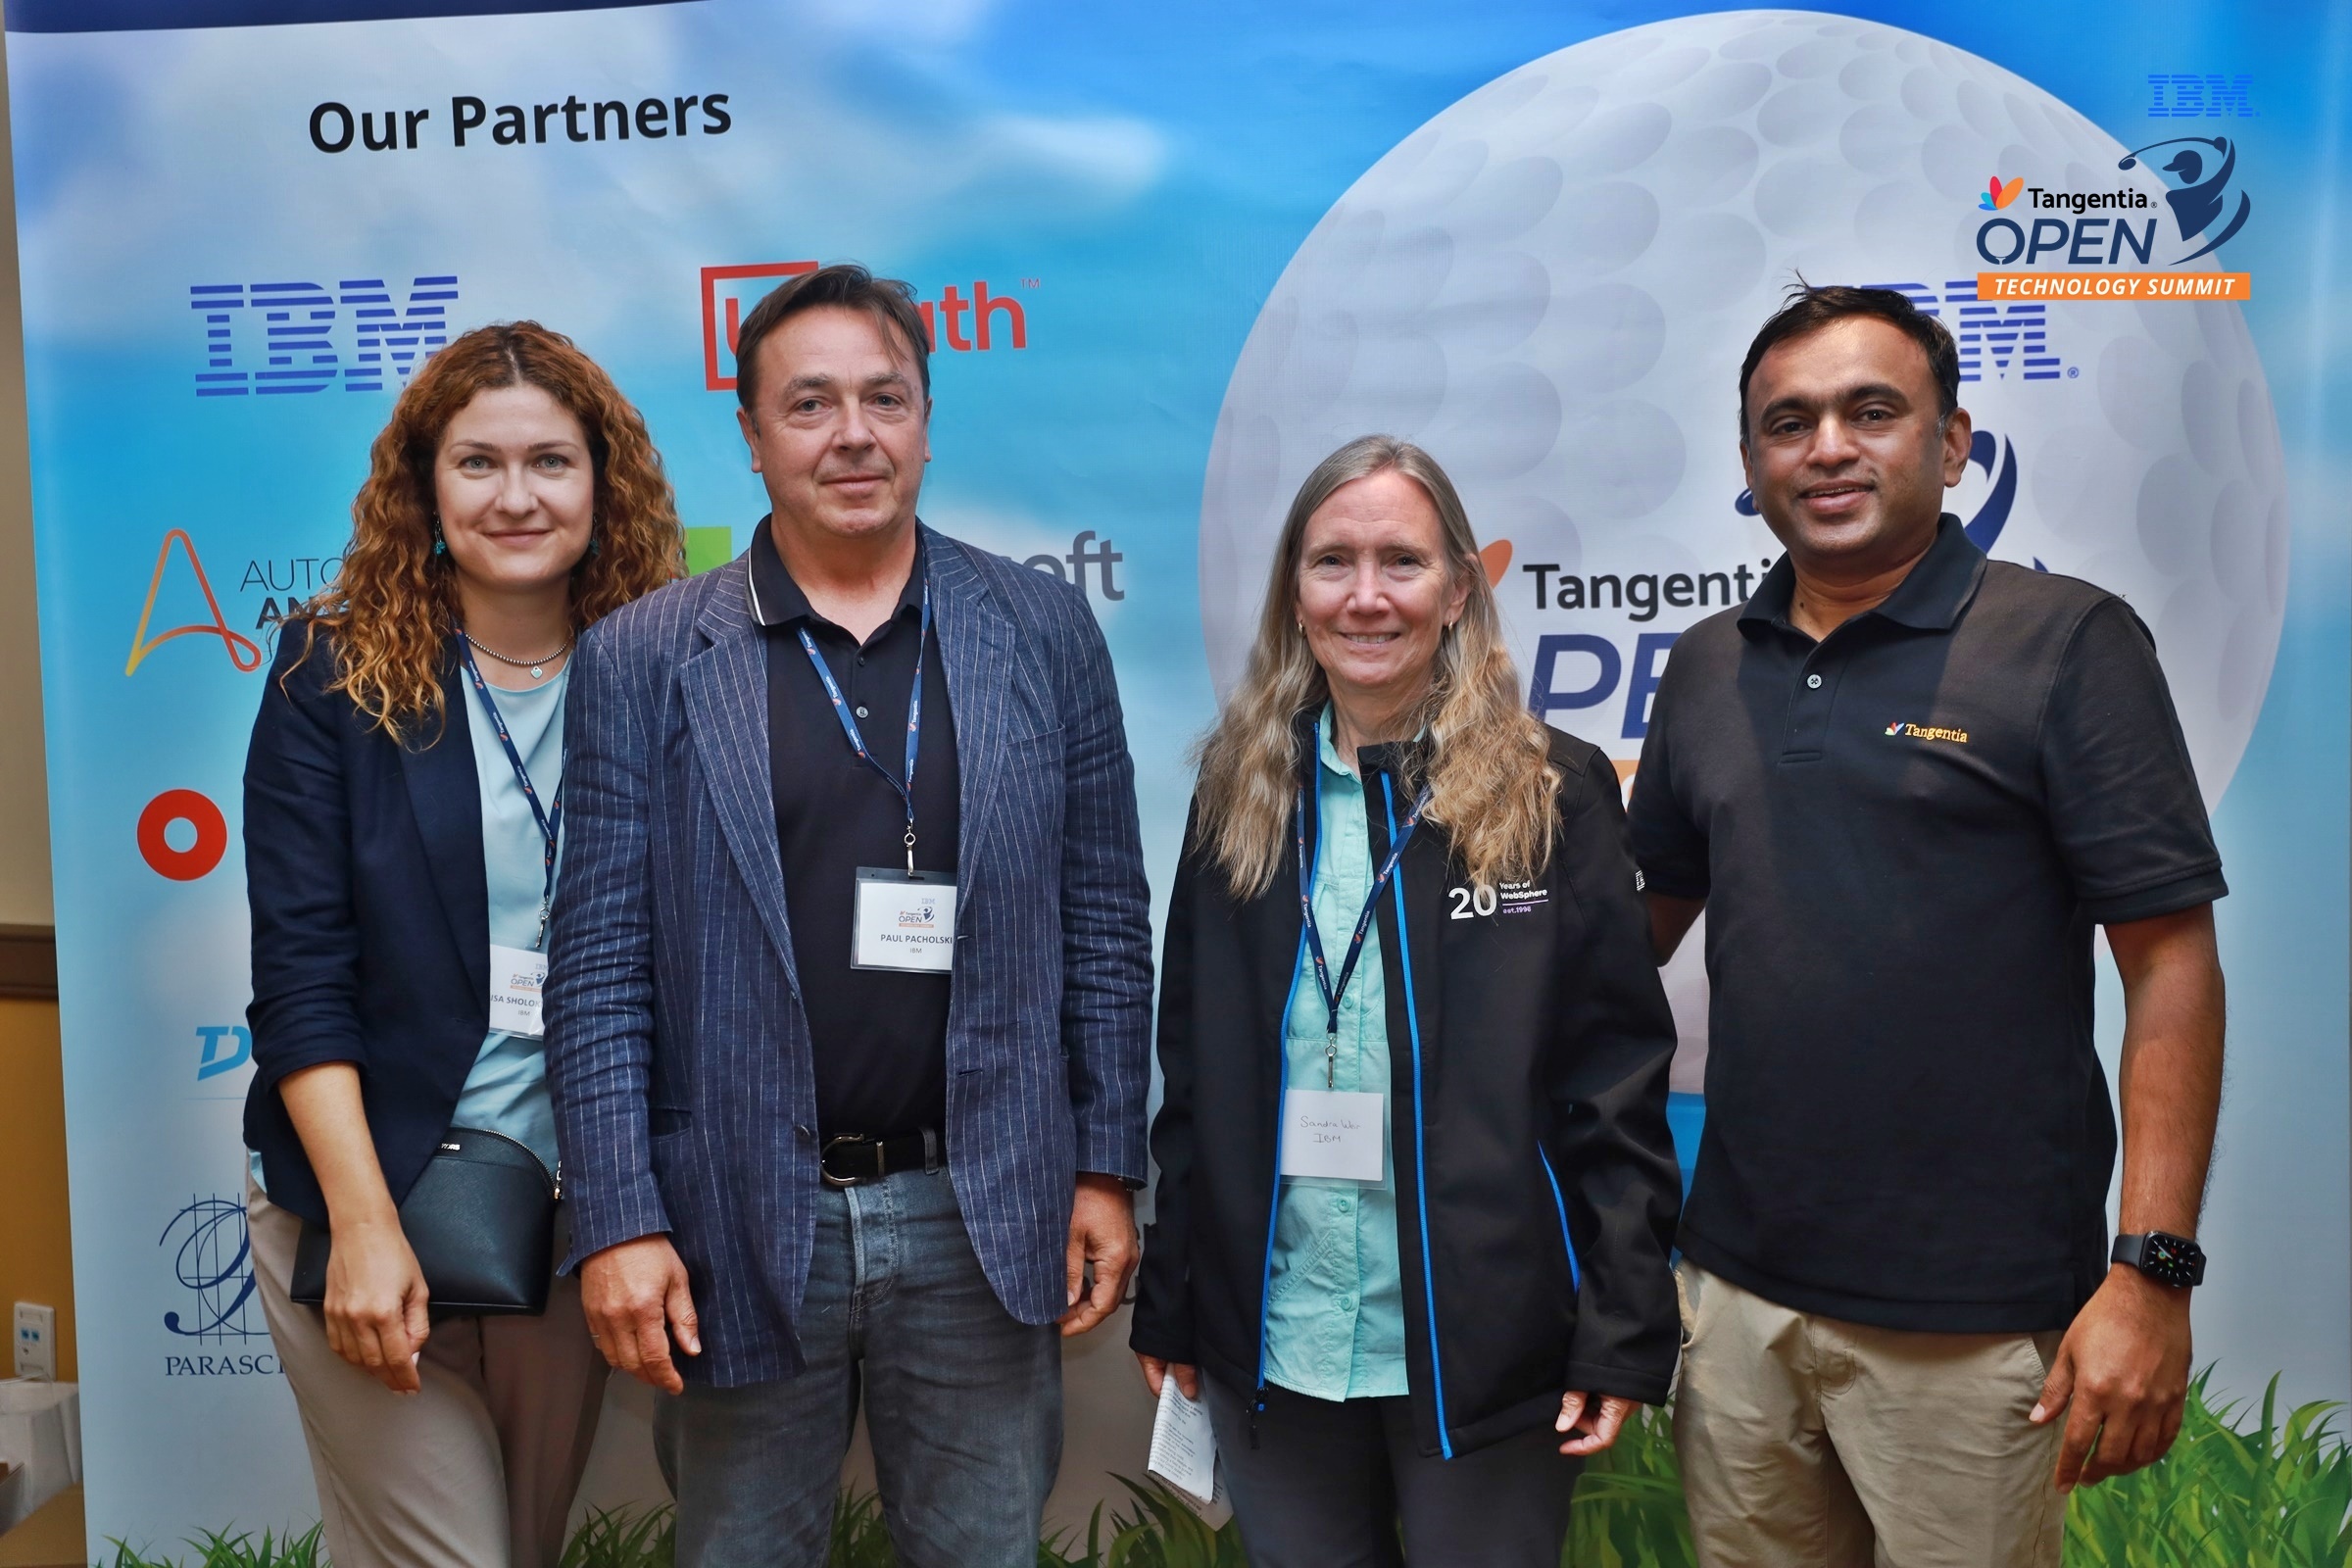 Tangentia | Tangentia Open Technology Summit – Asia